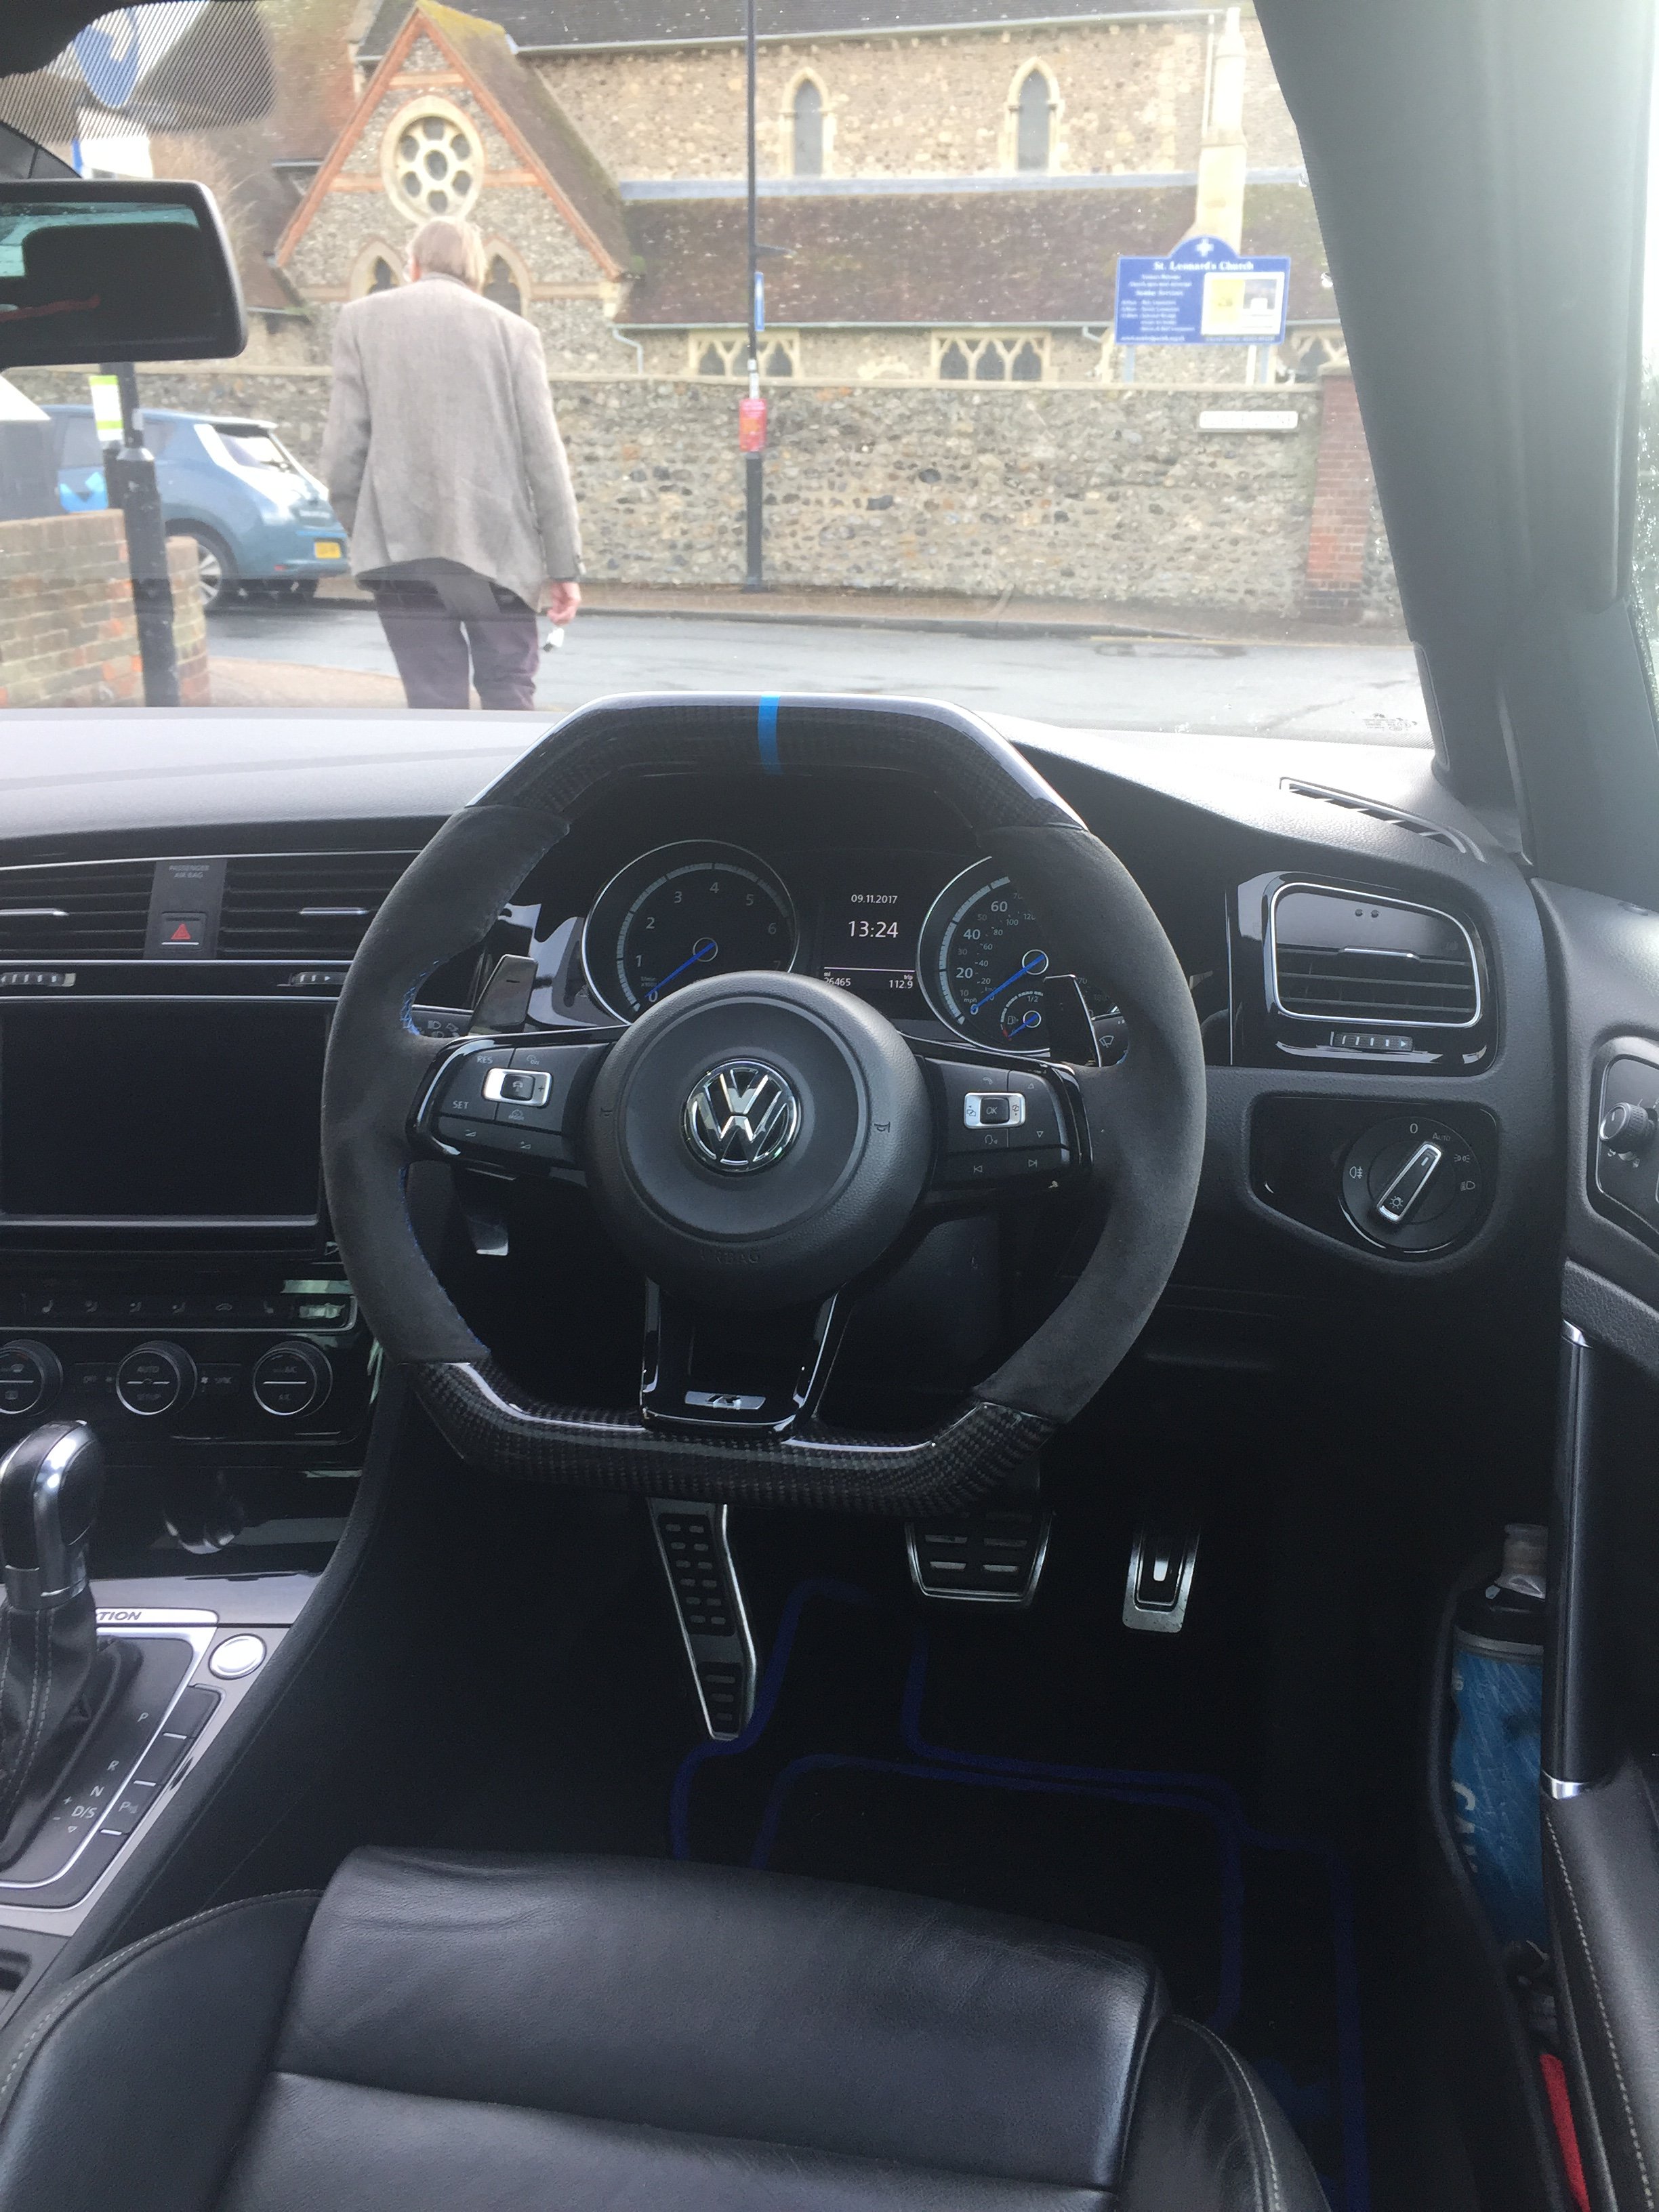 Steering wheel alcantara retrim - Modifying your Golf R MK7